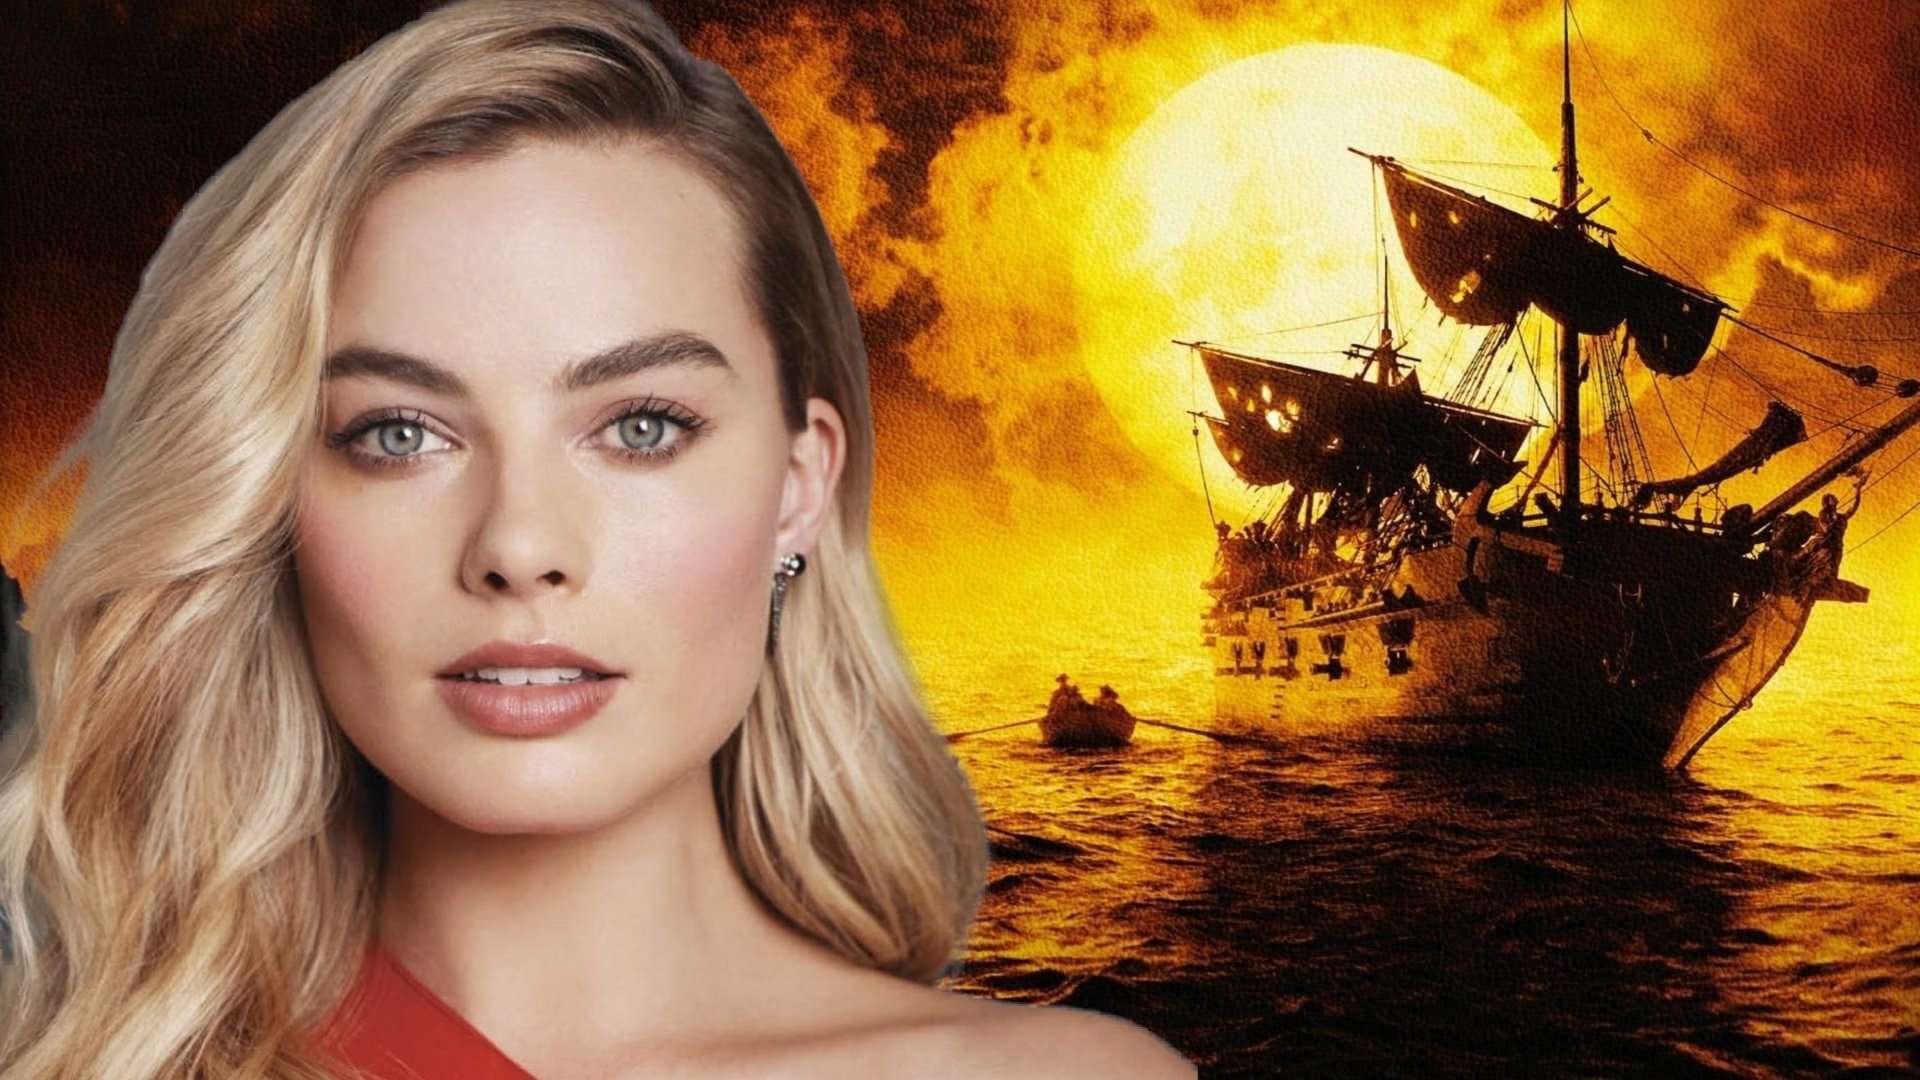 Margot-Robbie-in-Pirates-of-the-Caribbean.jpg